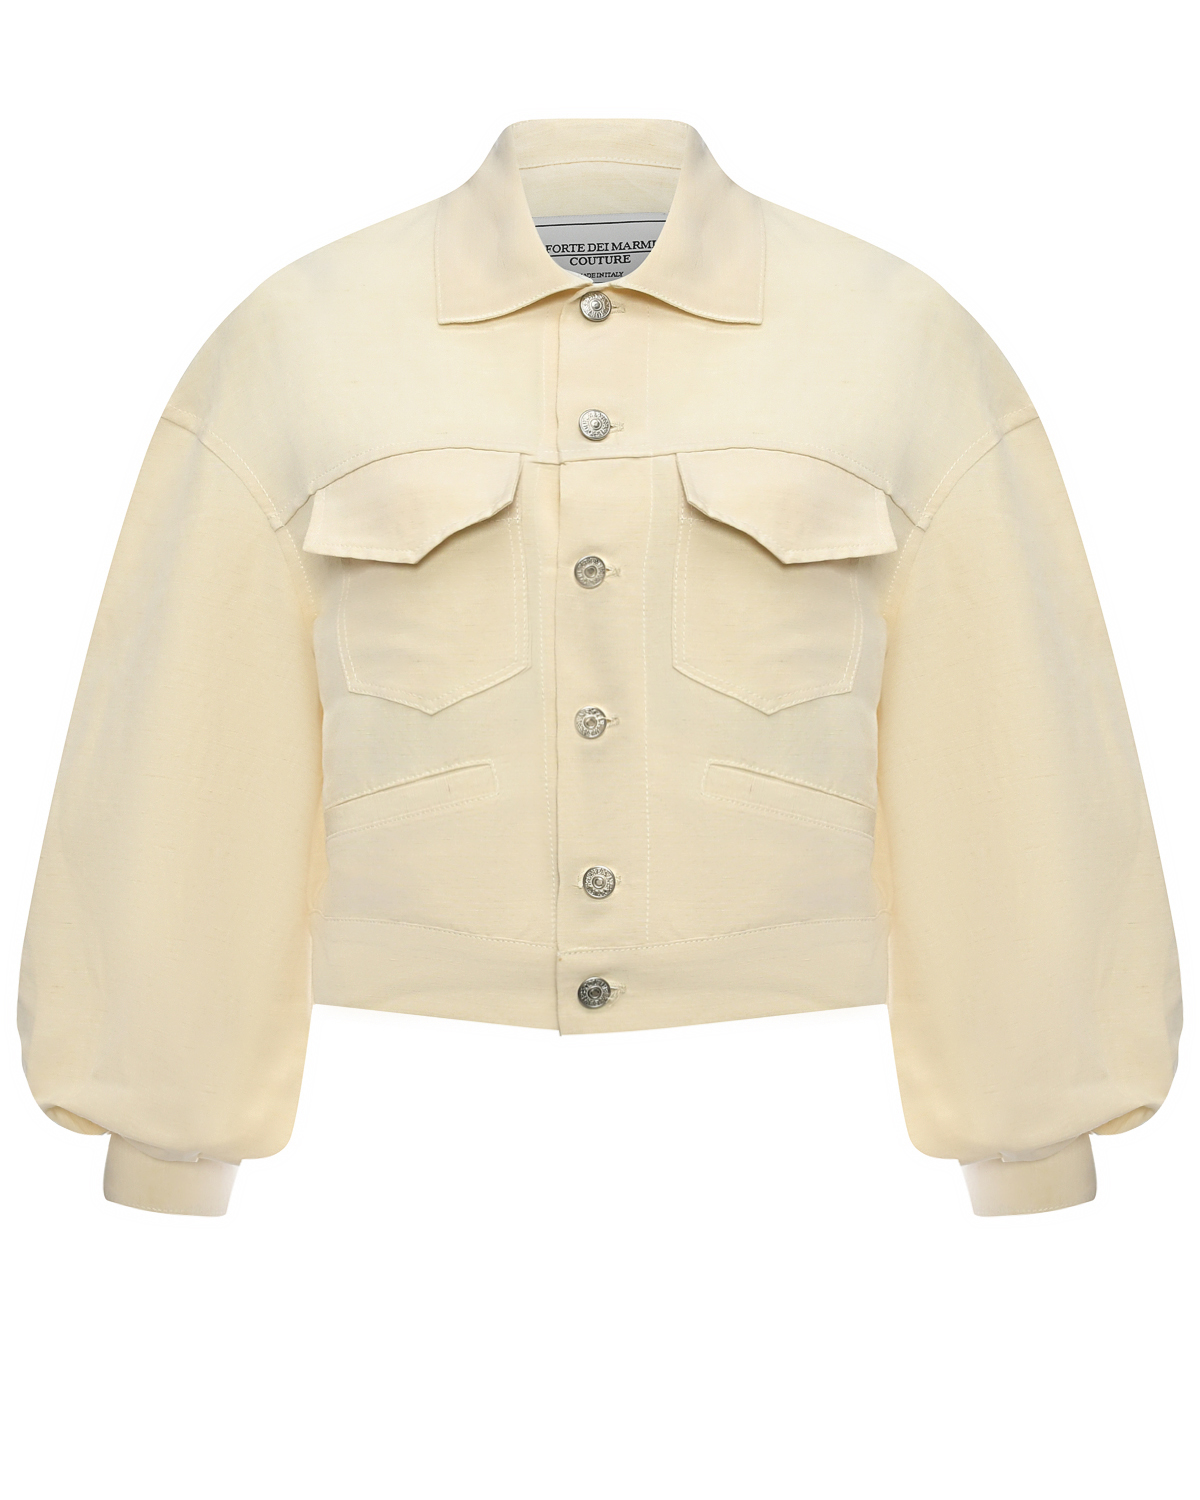 Куртка с разрезами по бокам, бежевая Forte dei Marmi Couture, размер 40, цвет бежевый